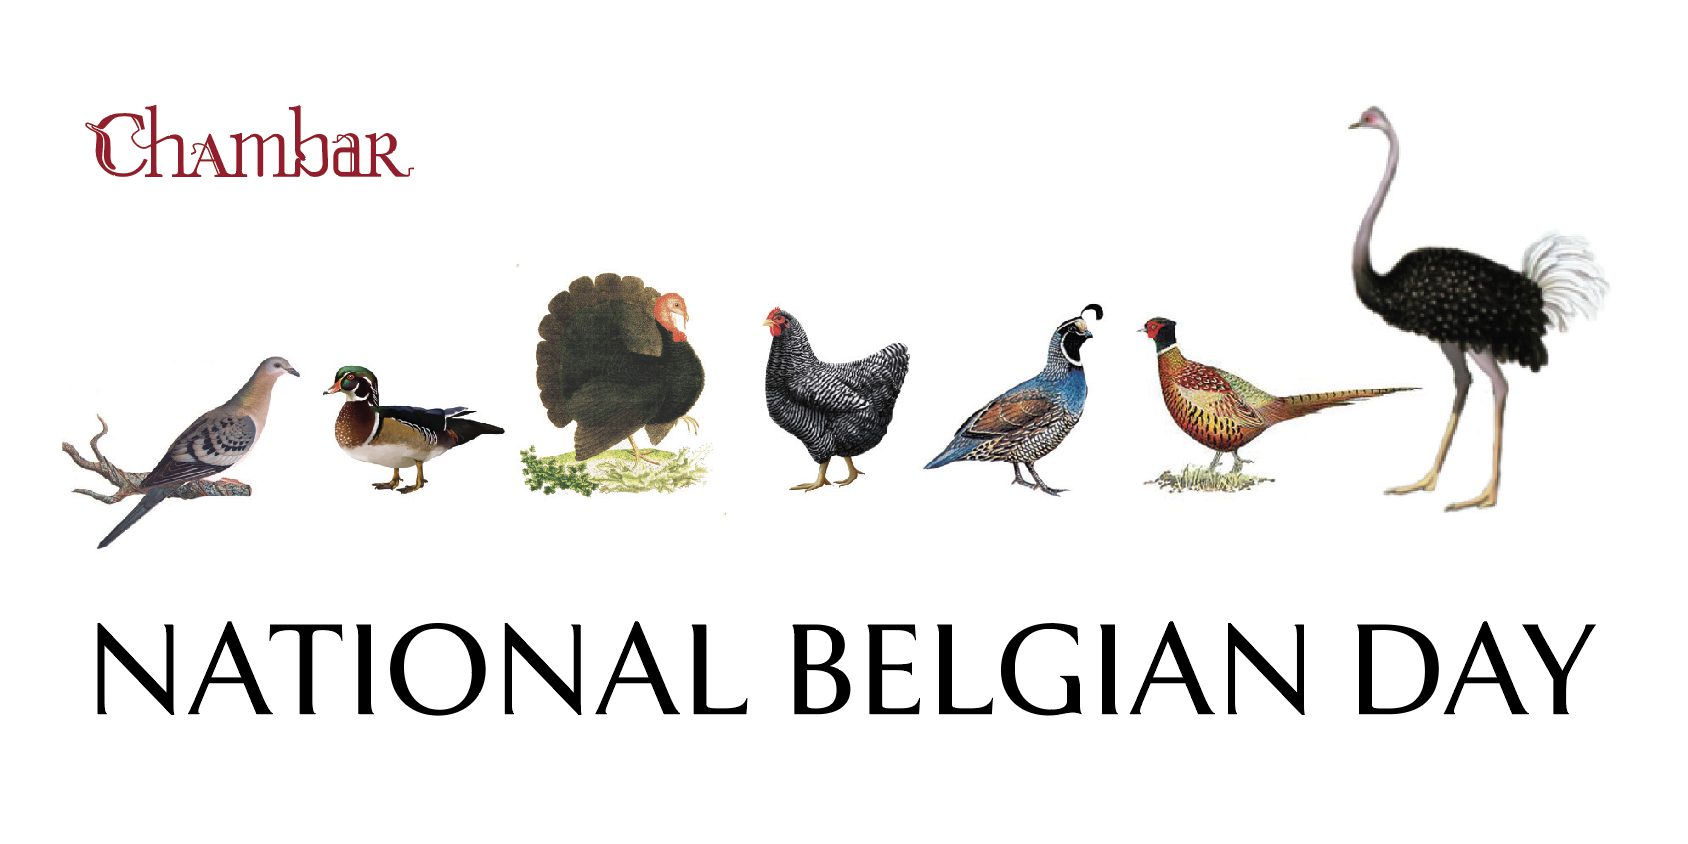 National Belgian Day Chambar